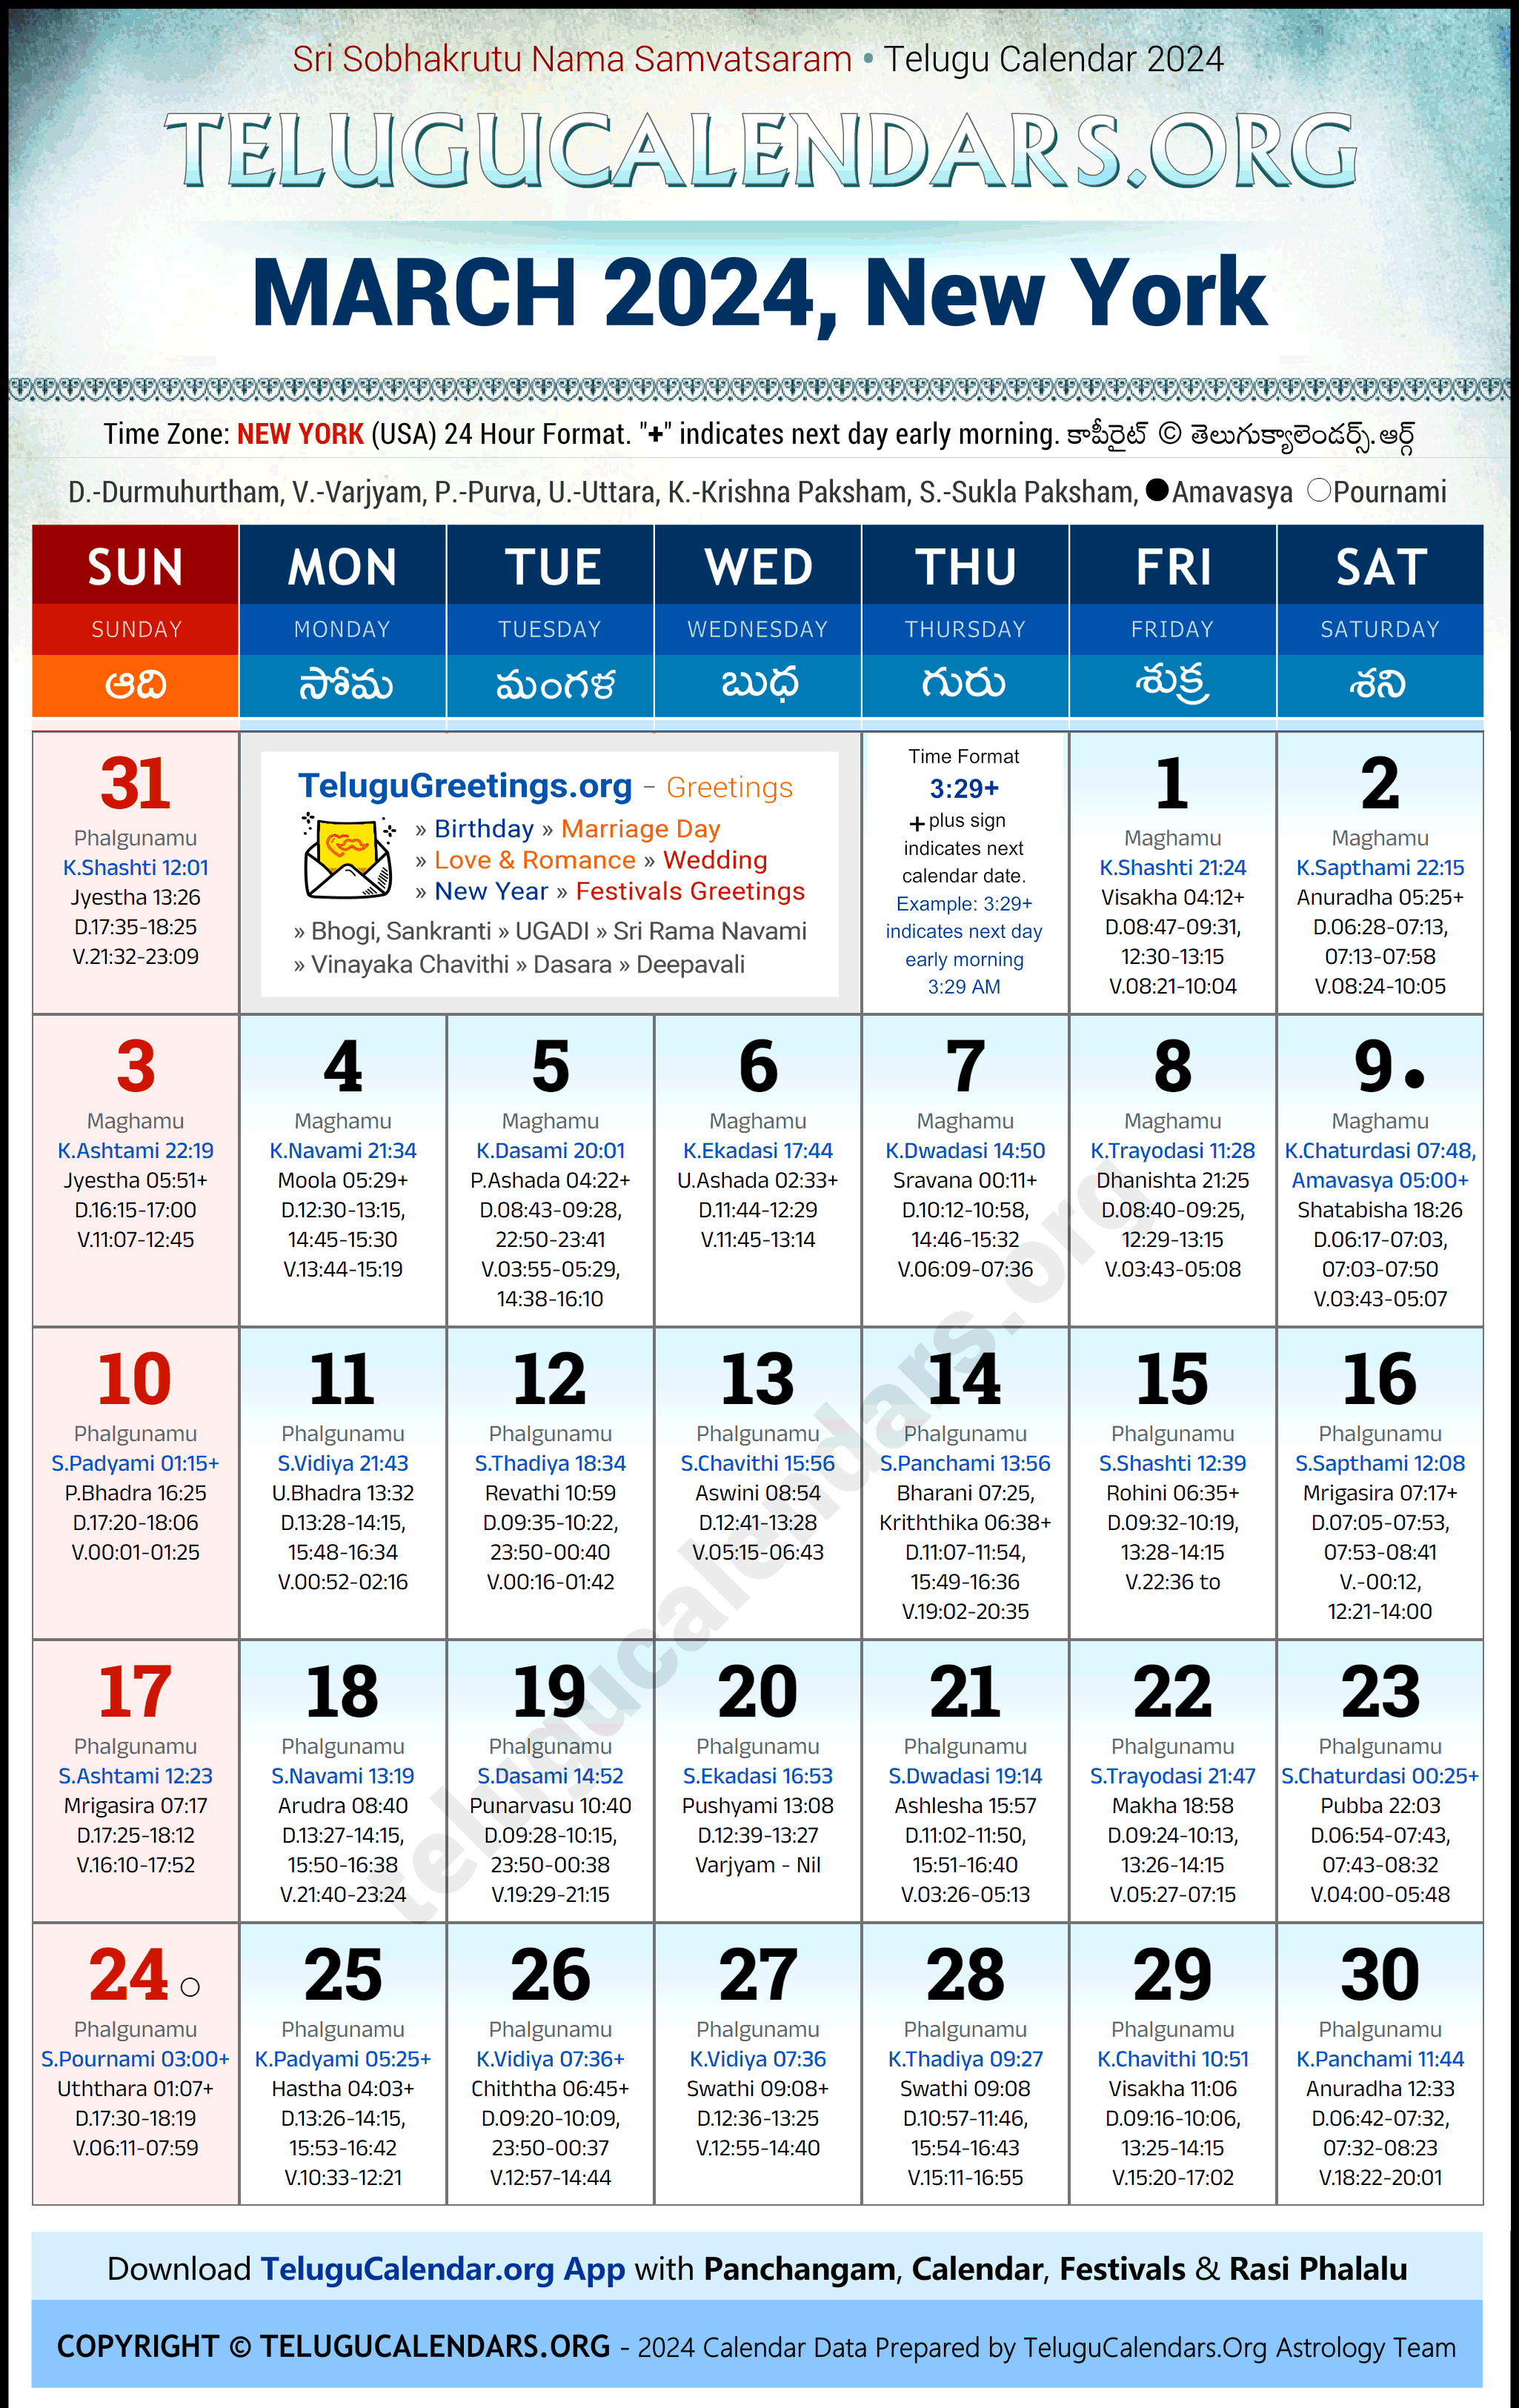 Telugu Calendar 2024 March Festivals for New York